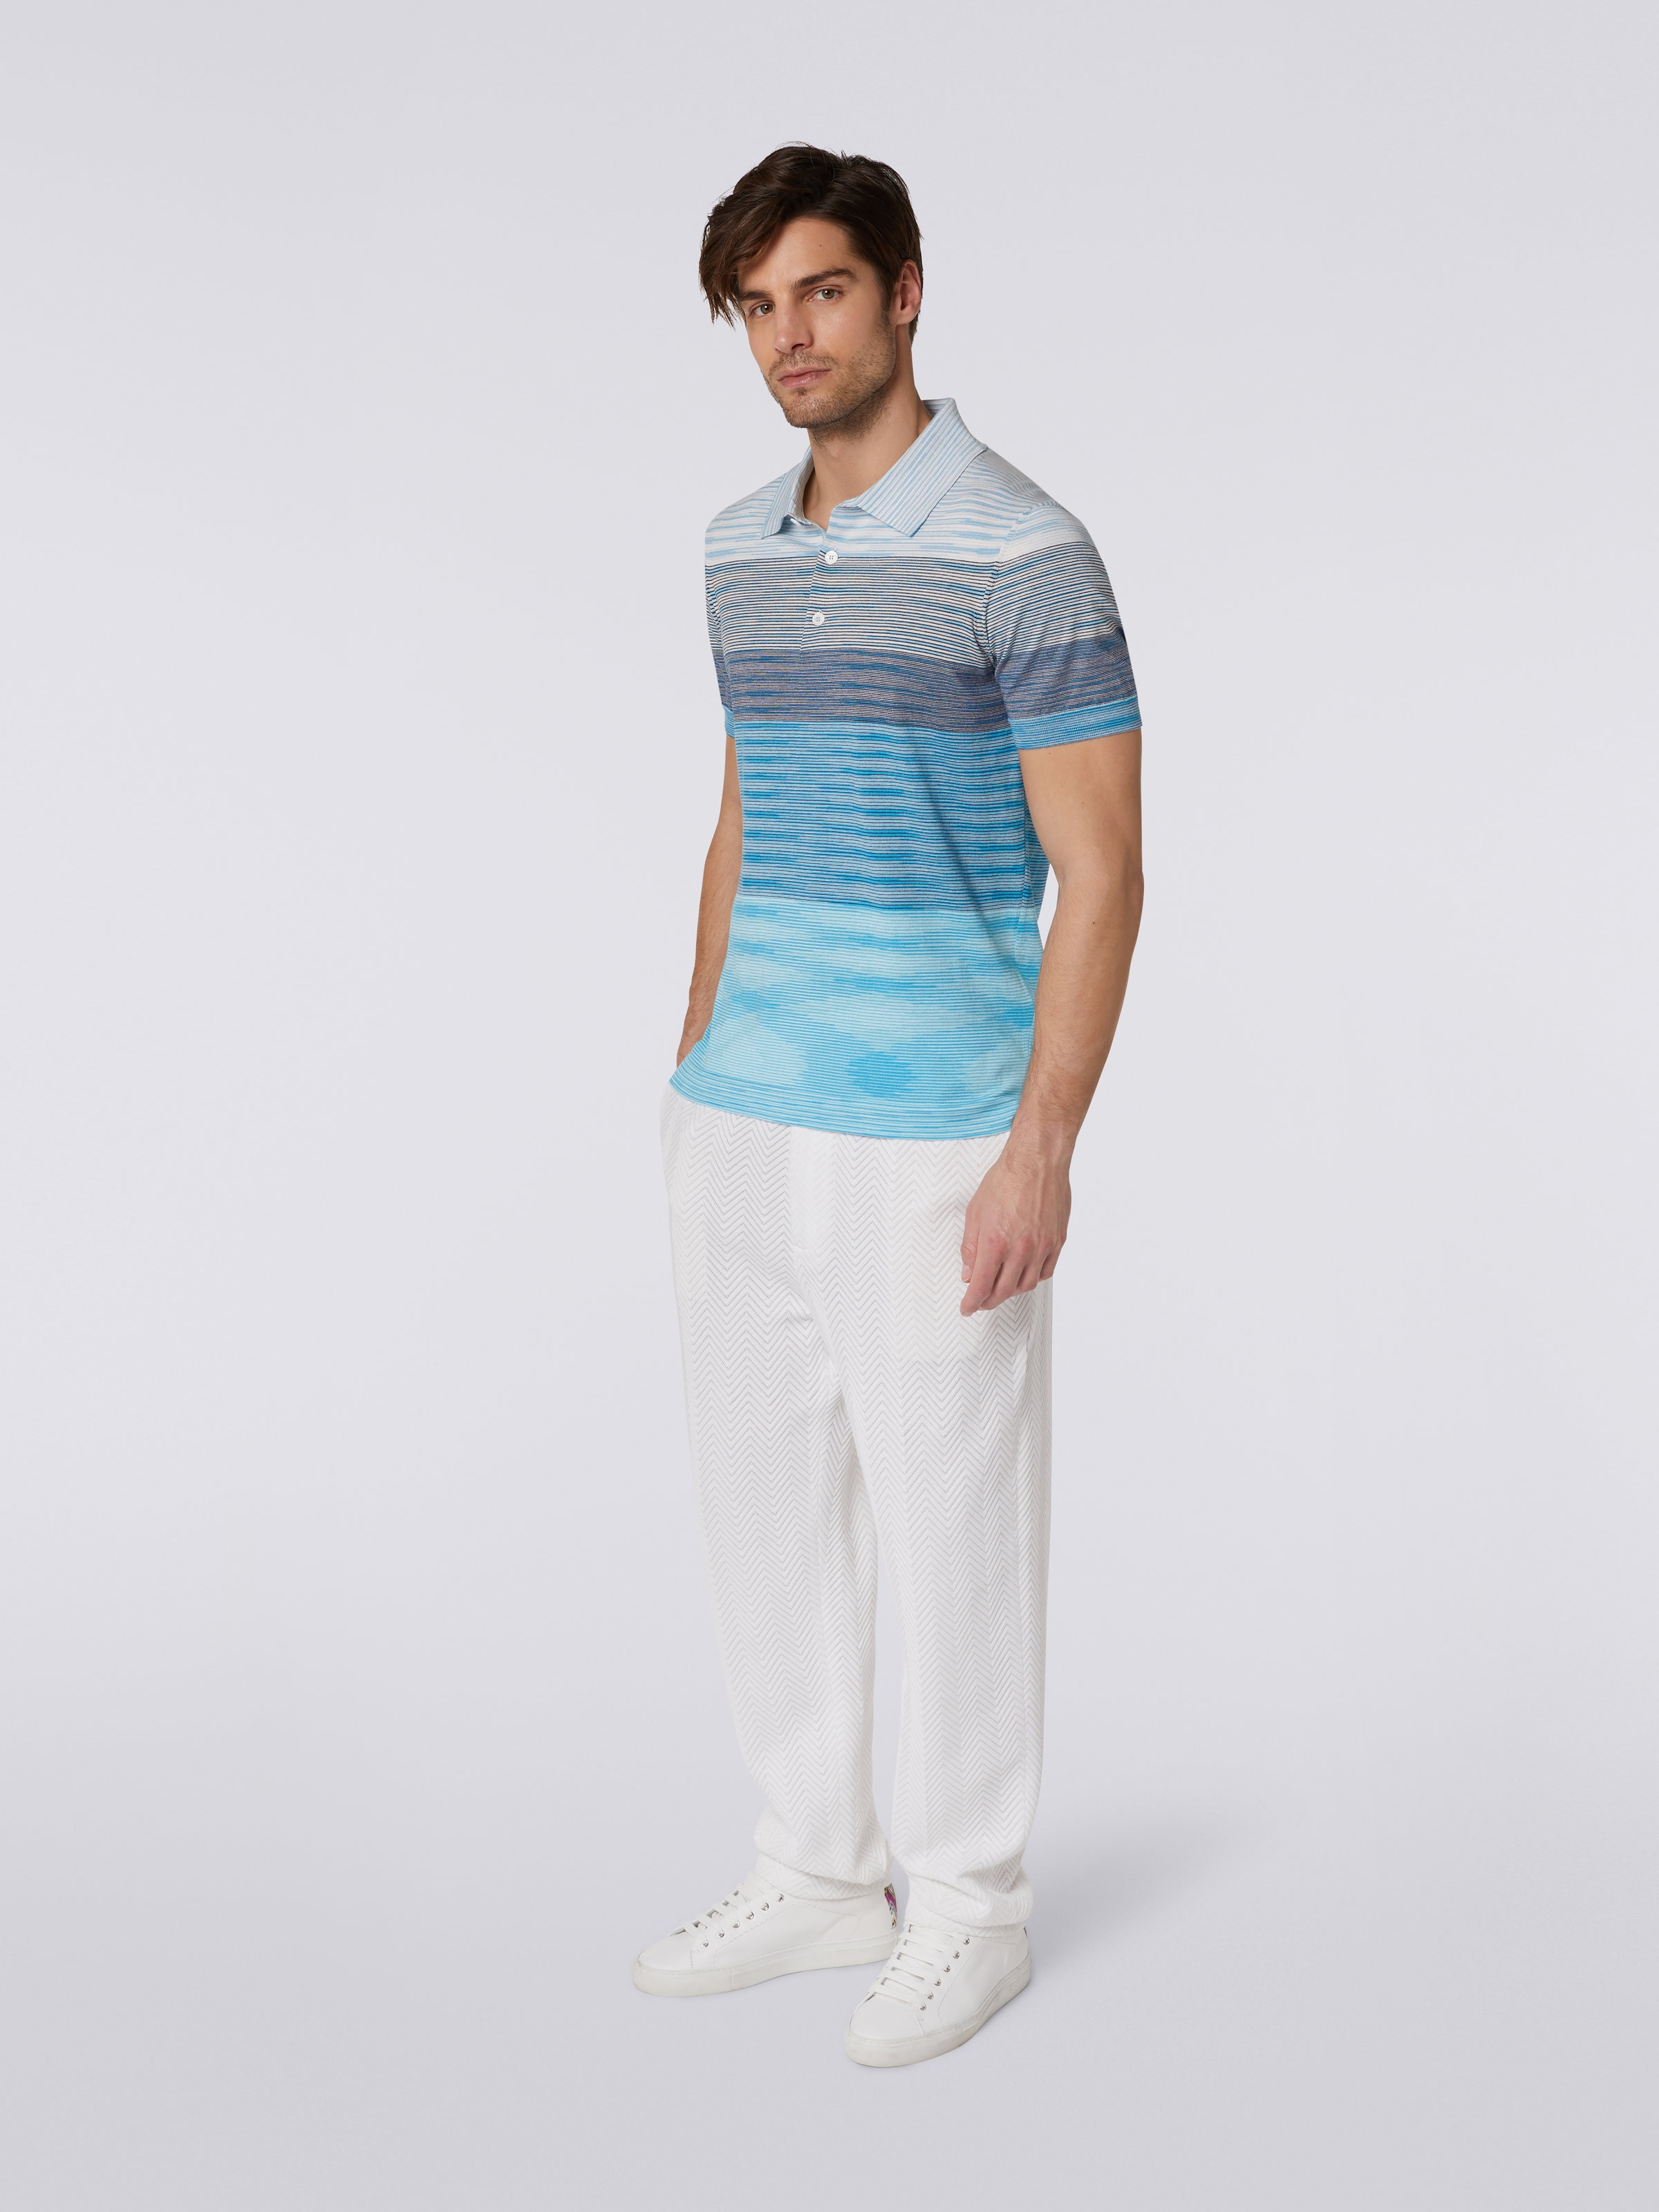 Dégradé striped cotton short-sleeved polo shirt, White & Light Blue - 2